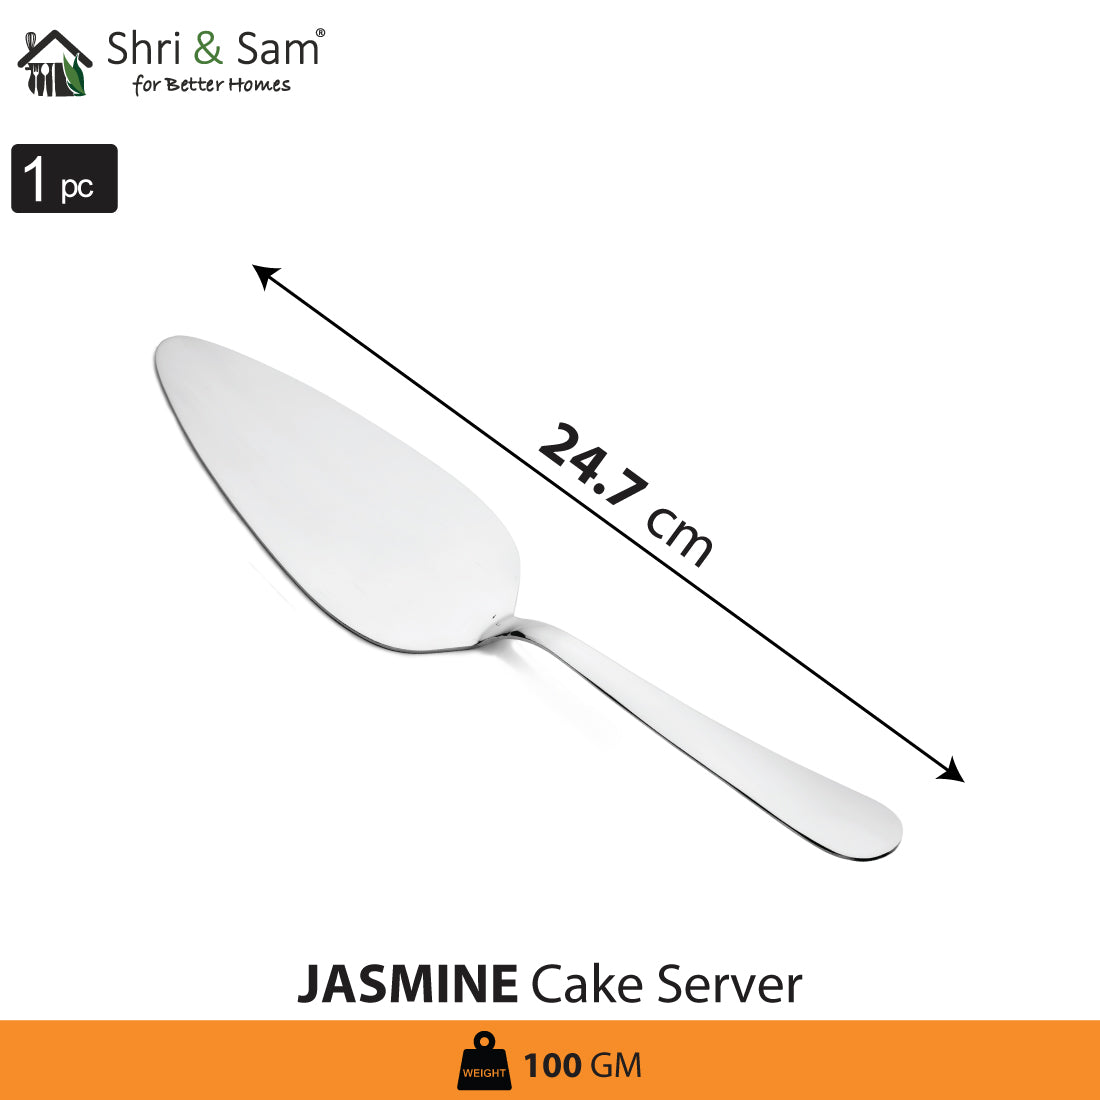 Stainless Steel Cake Server Jasmine